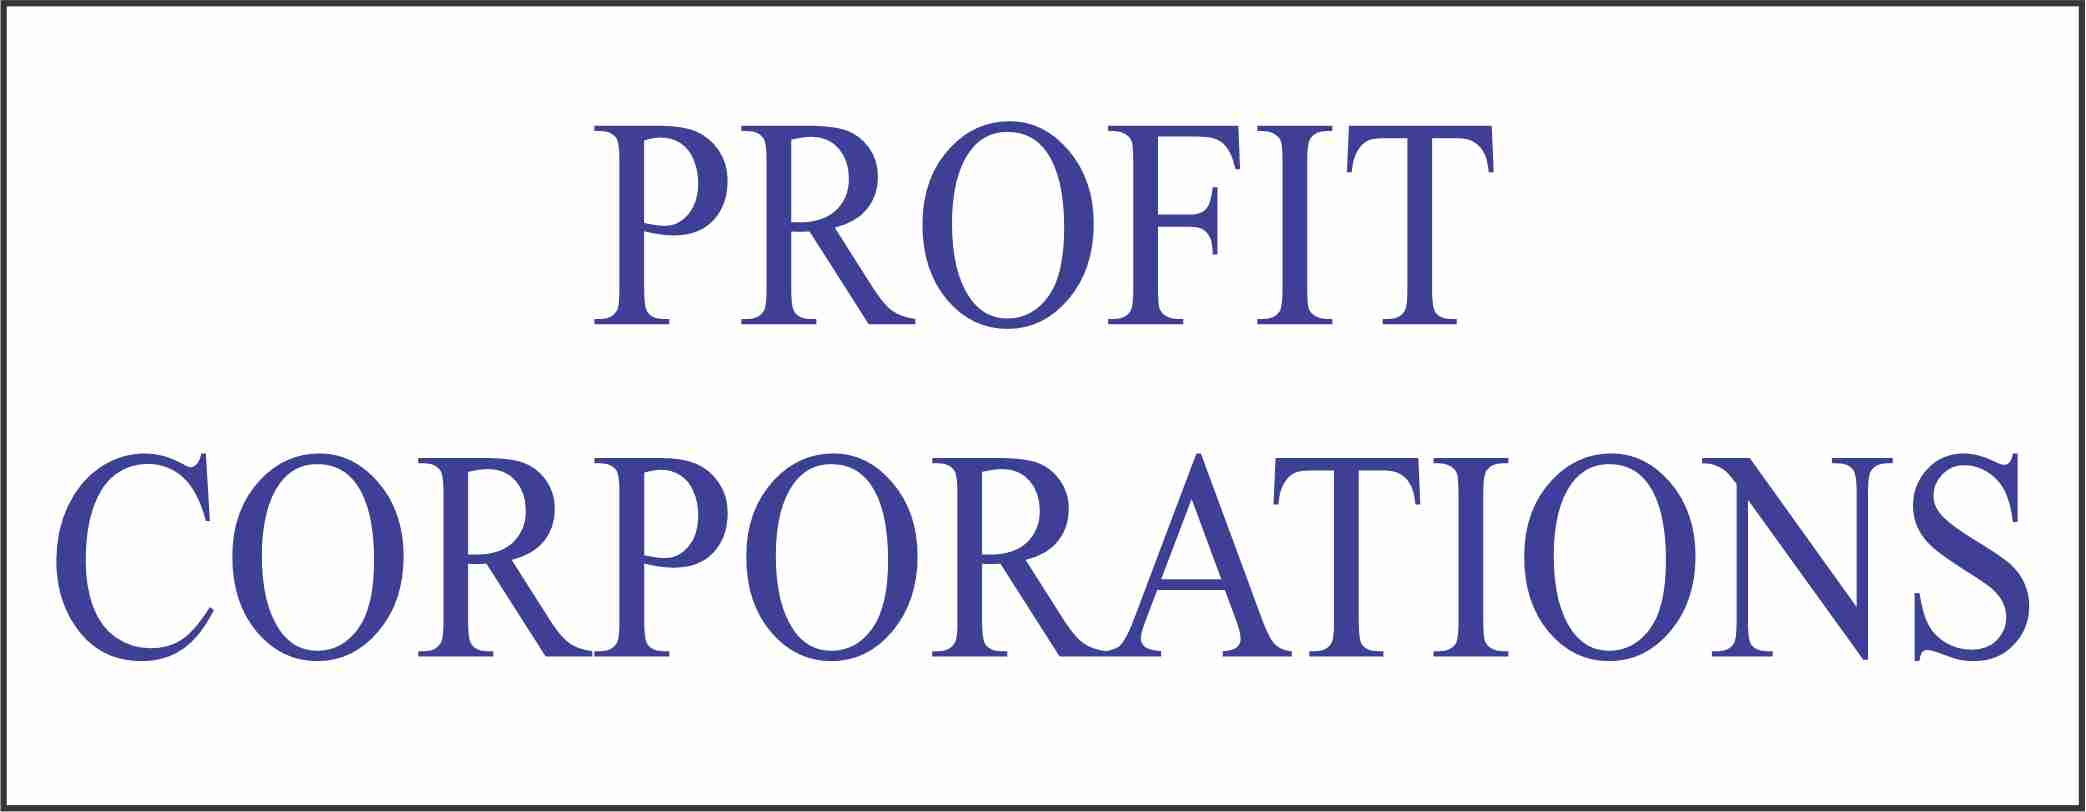 Profit Corporations